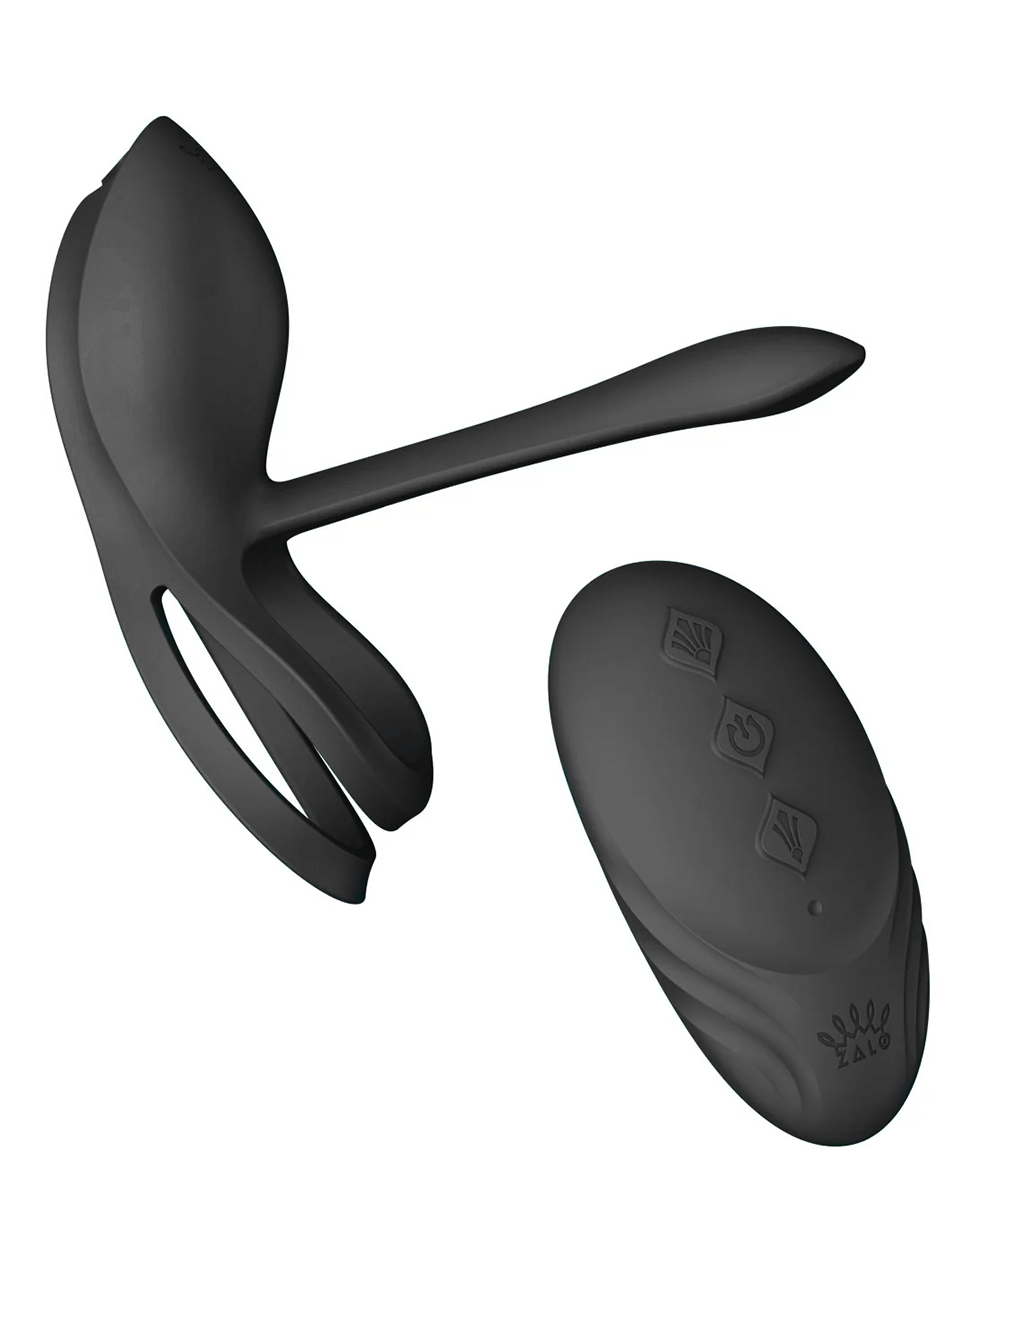 Zalo Bayek - Obsidian Black - Product With Remote